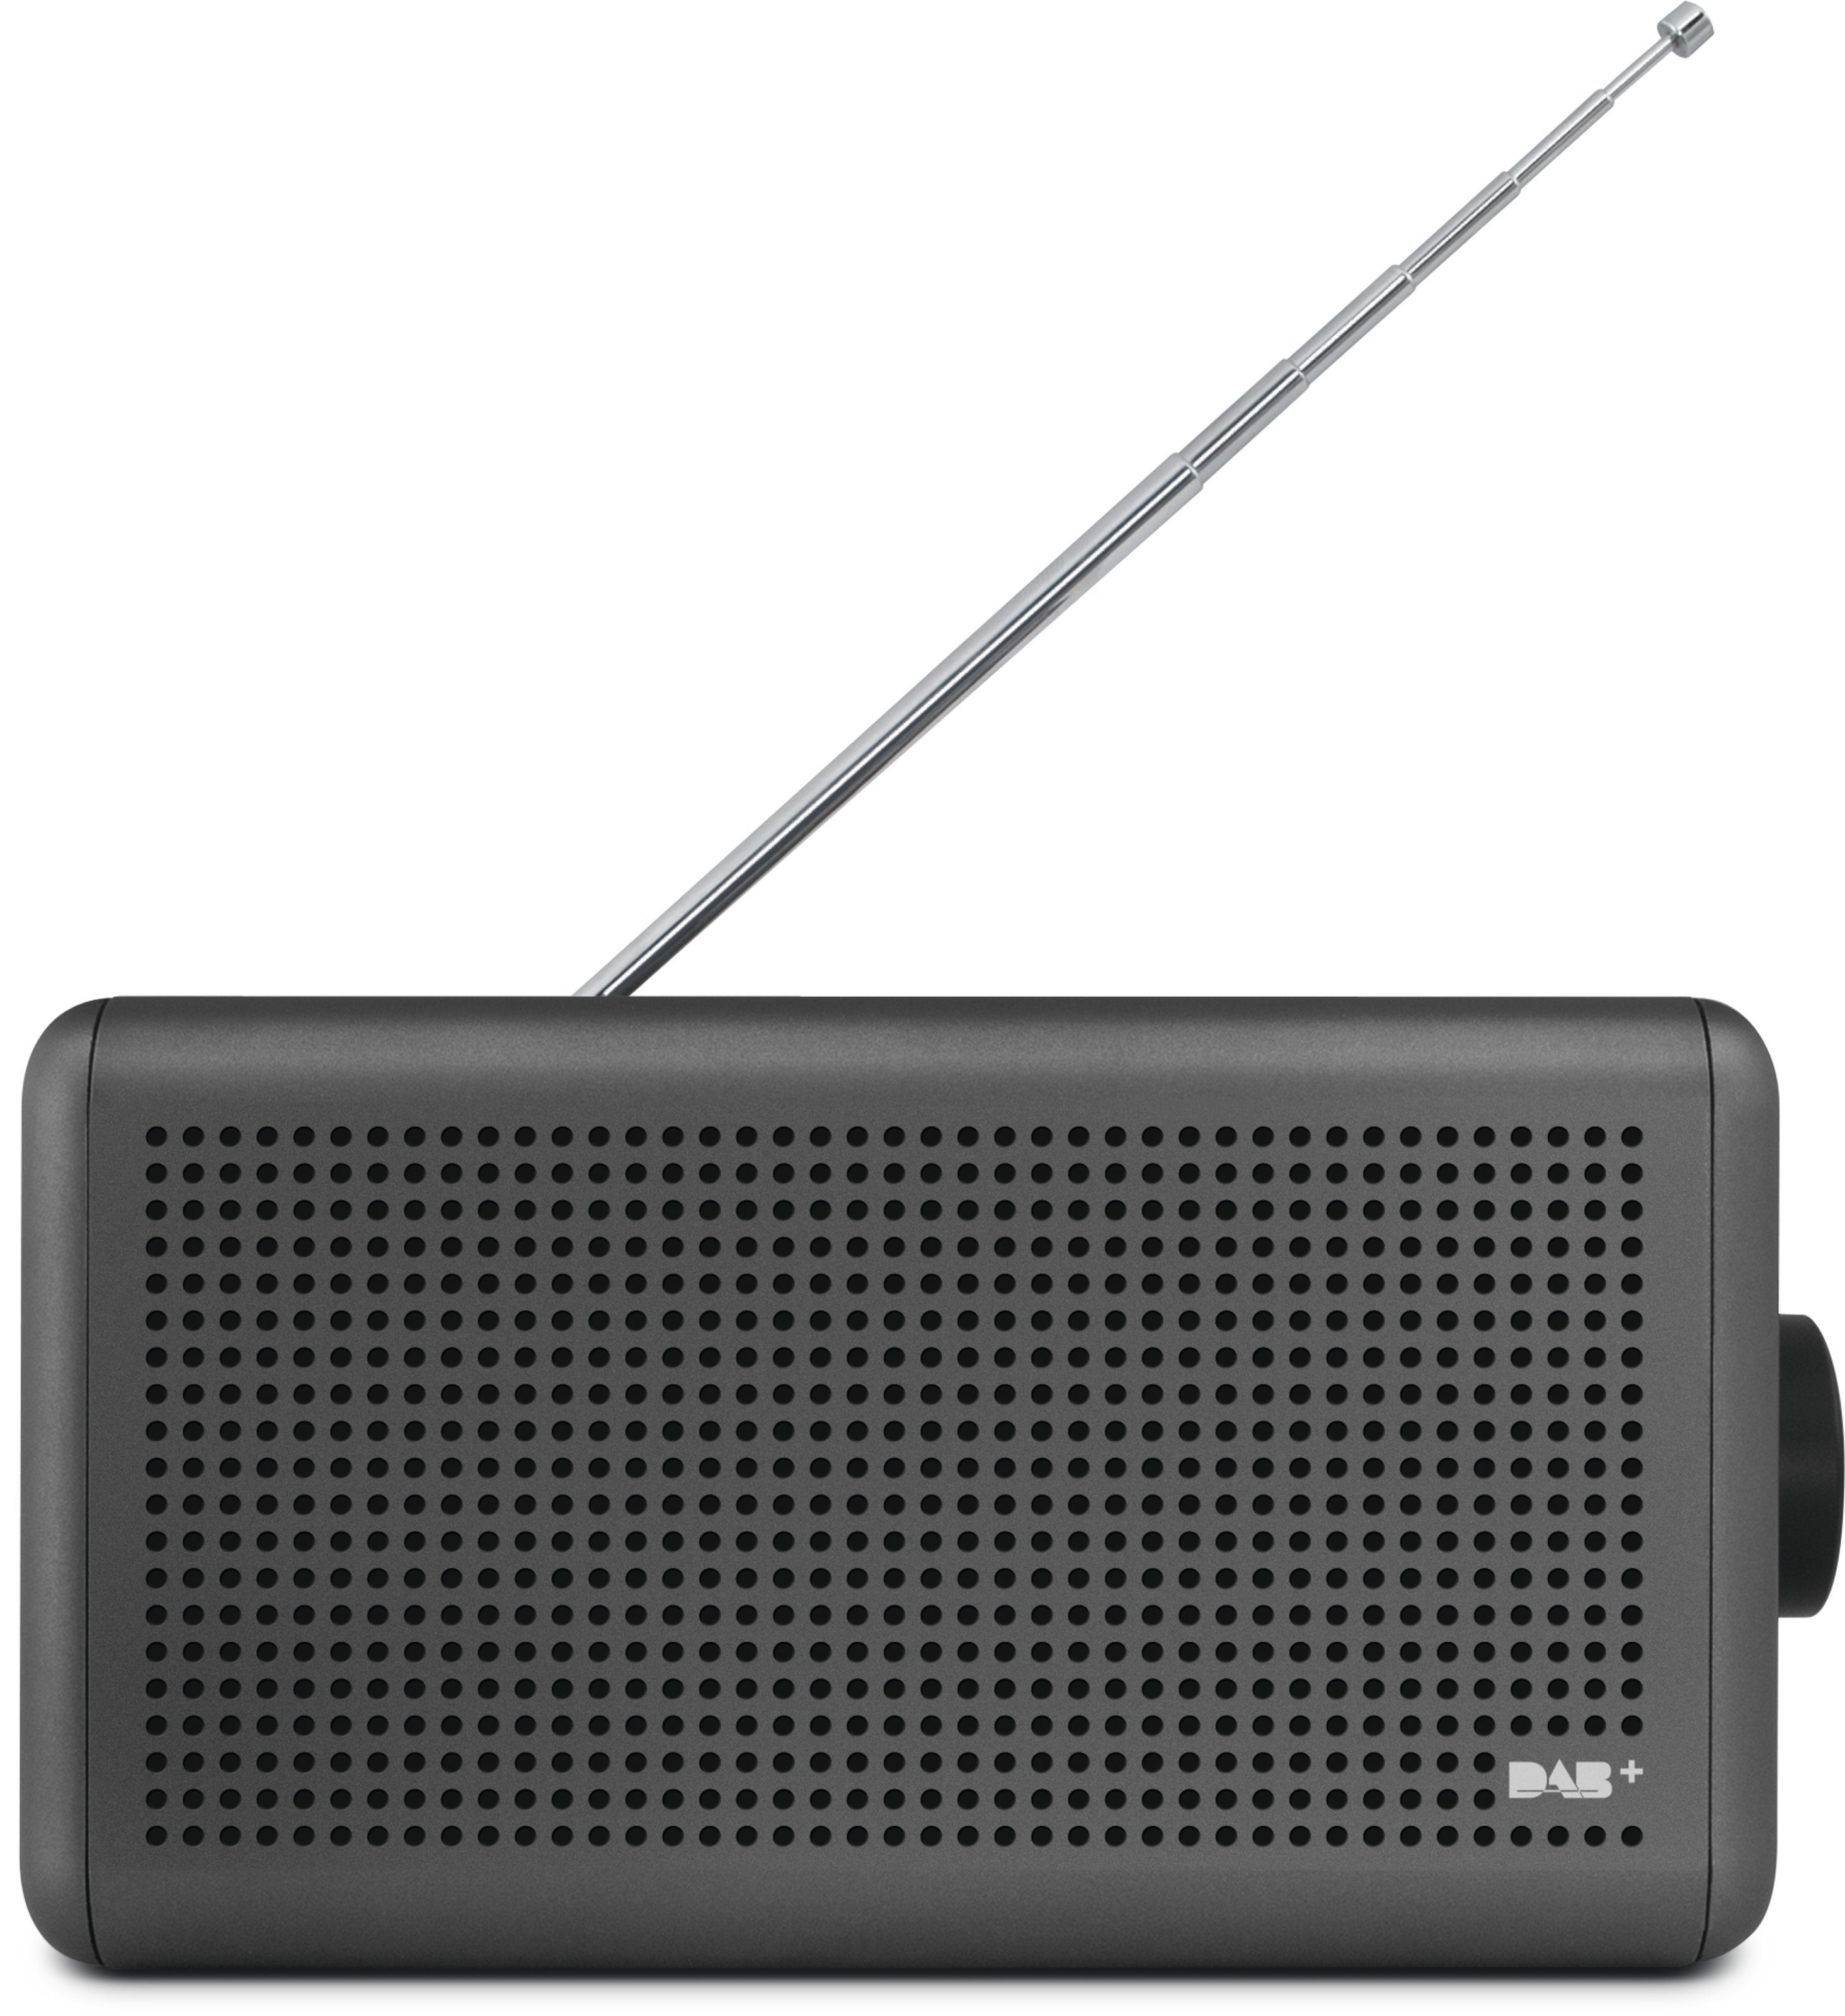 Nordmende Transita 210 Digitalradio (DAB) (Digitalradio (DAB), UKW mit RDS, 6,00 W, Bluetooth Lautsprecher, tragbares Radio, mit Akku) anthrazit